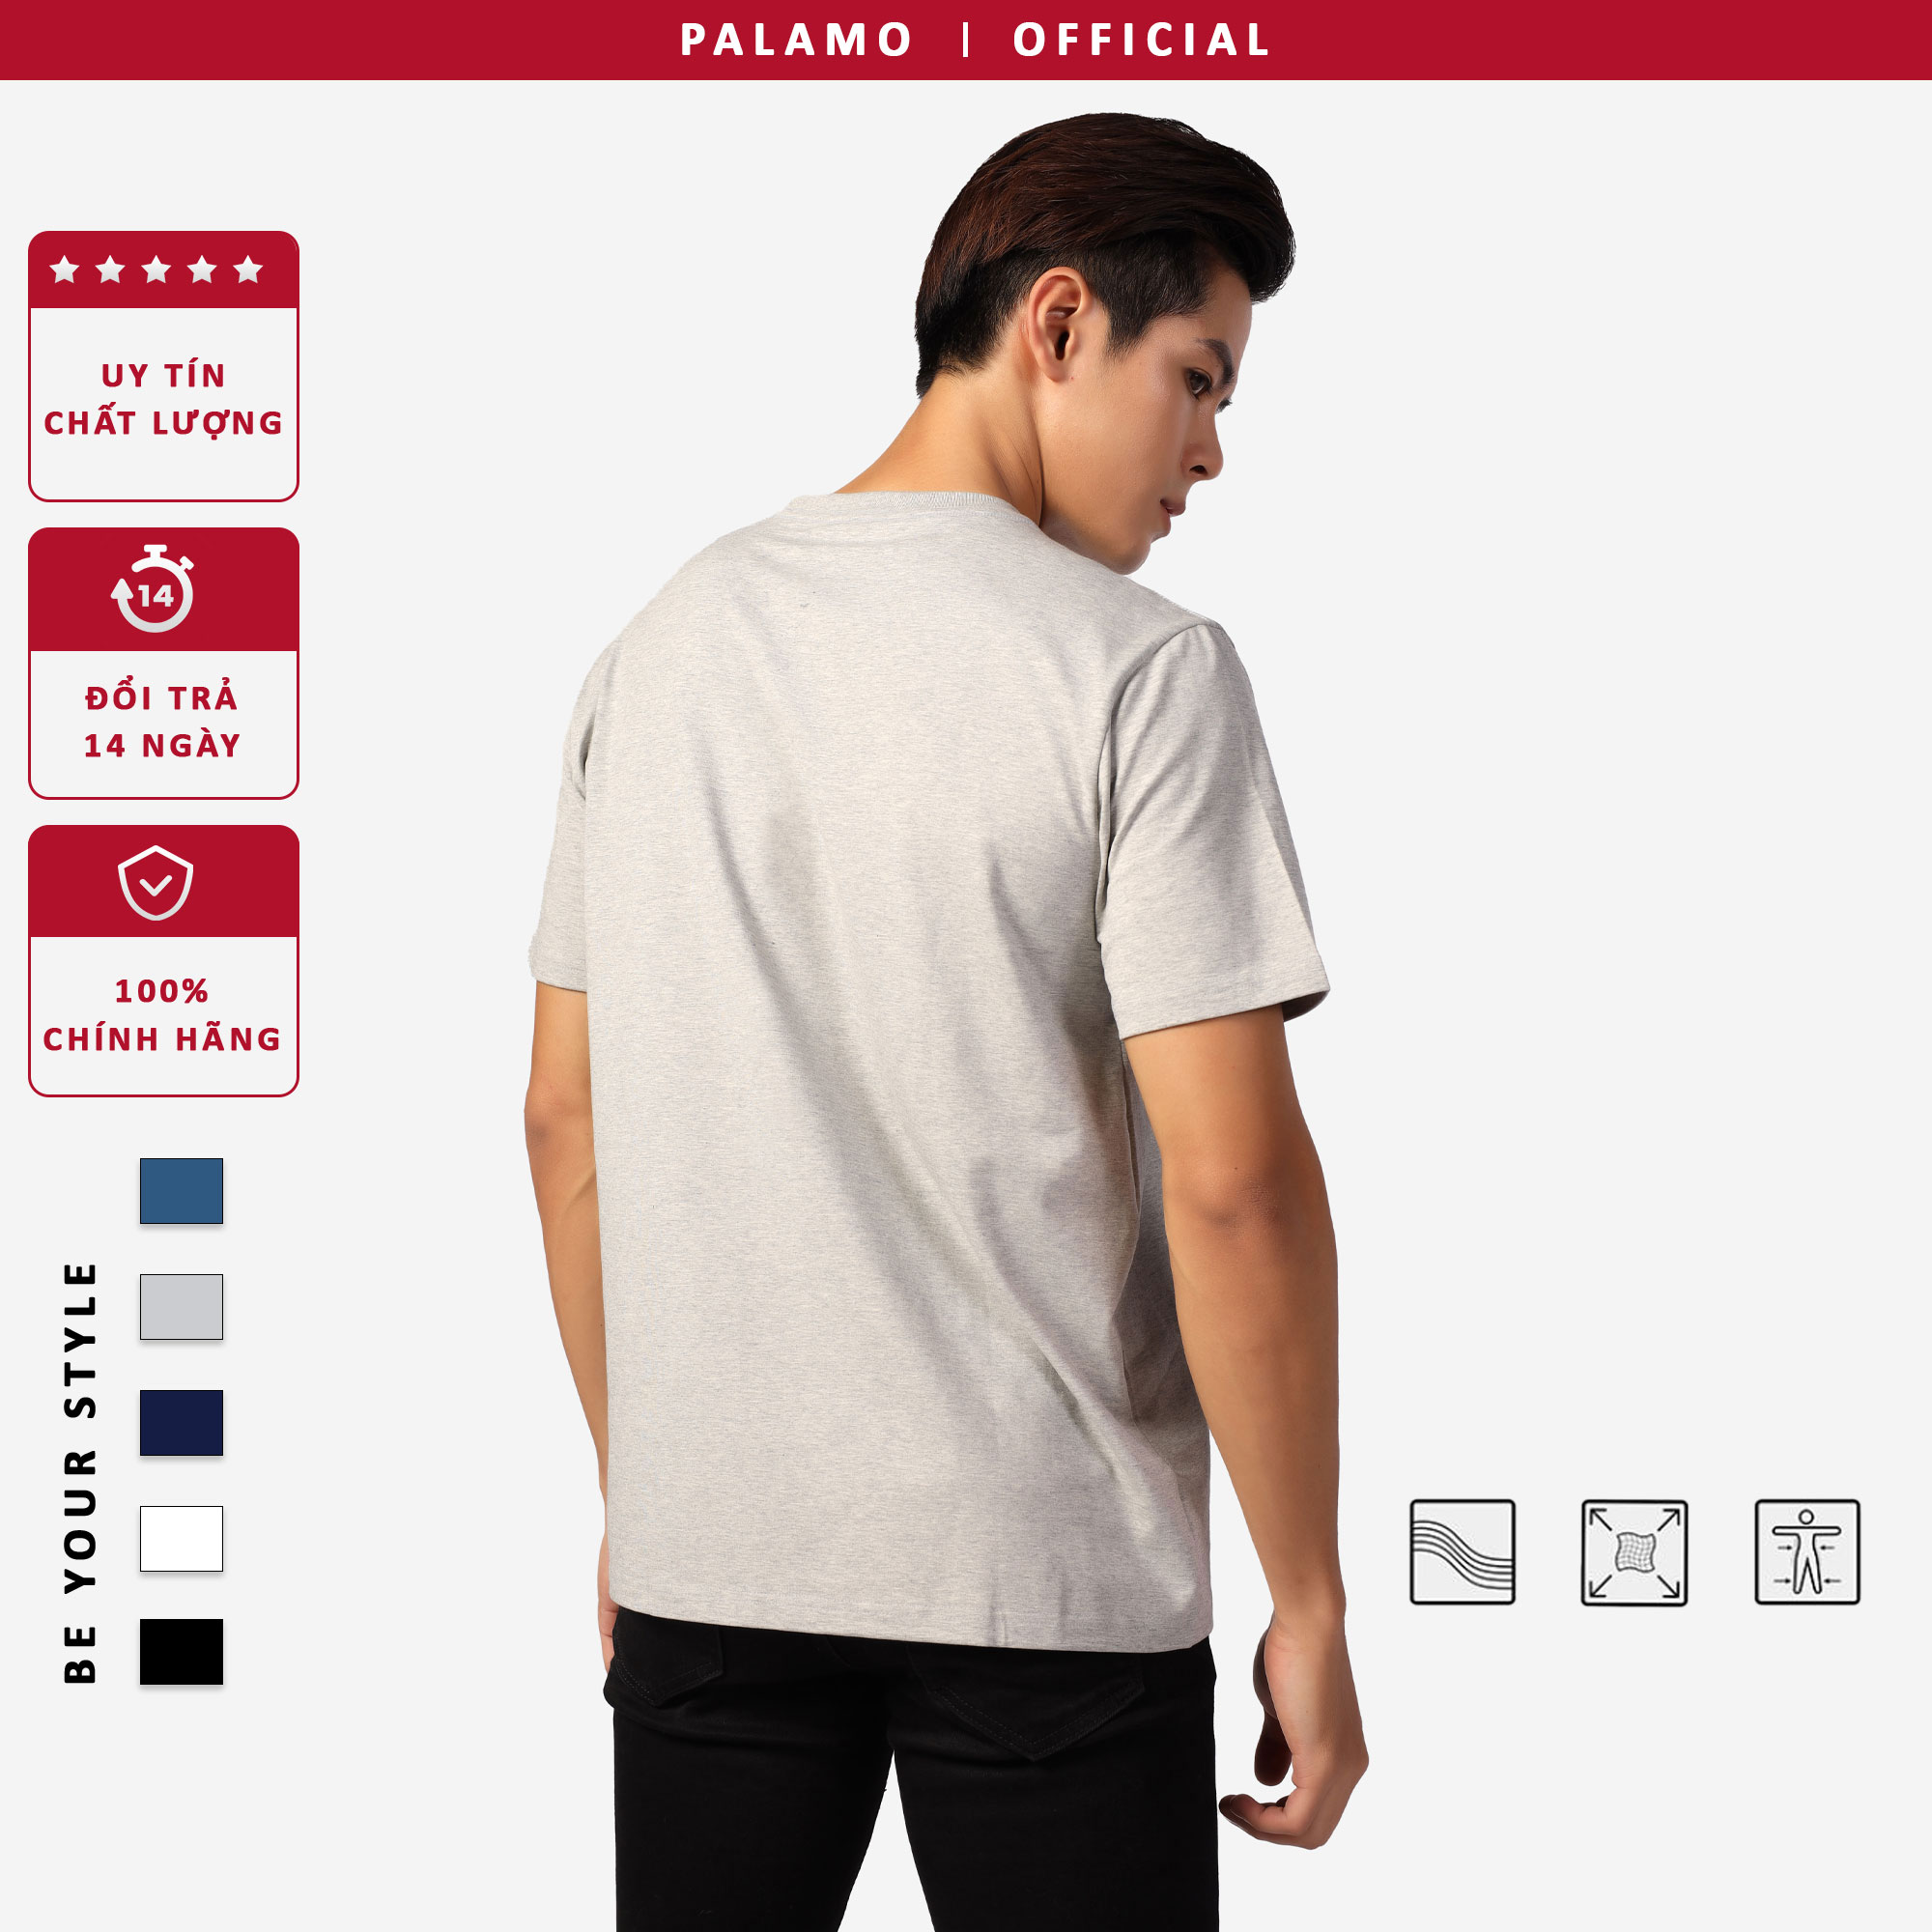 Áo thun nam cotton compact Palamo classic regular fit / màu xám